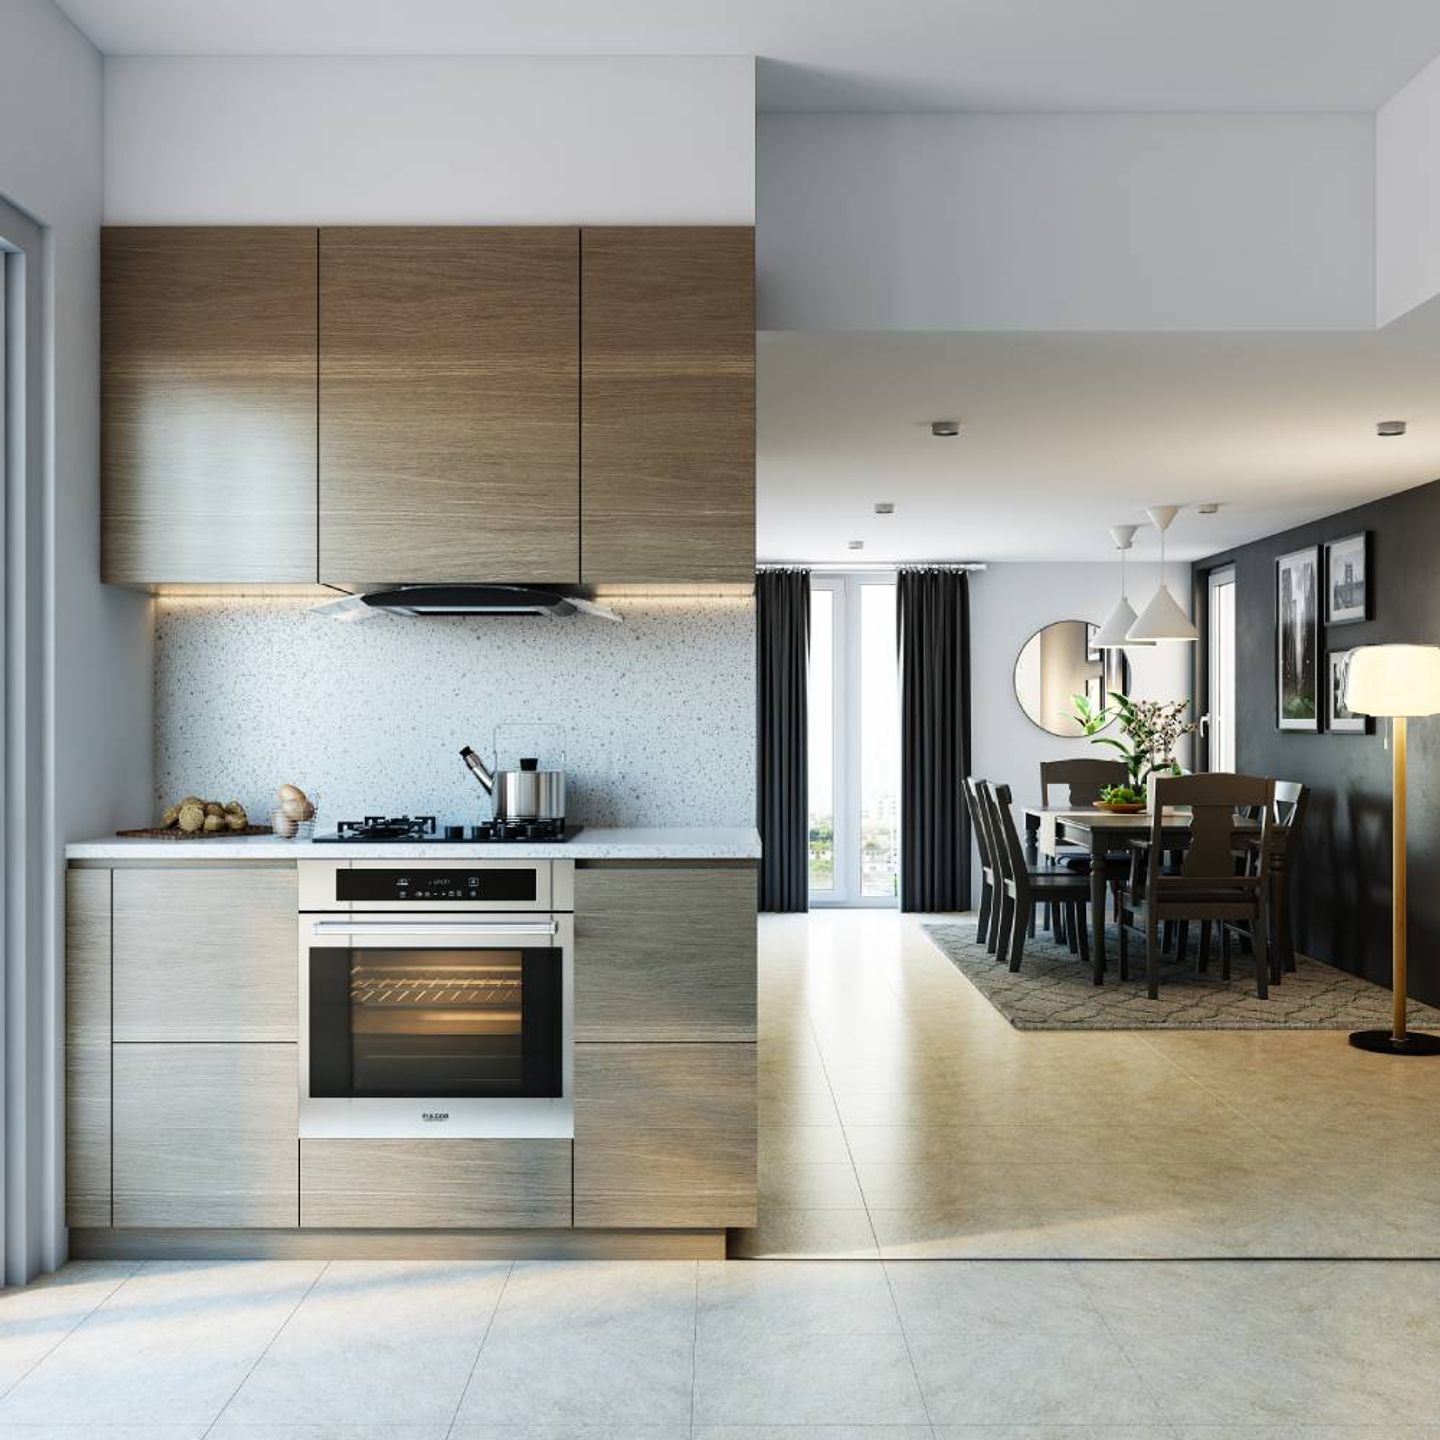 Brown Parallel Kitchen Design With Suede-Finish Laminates - Livspace